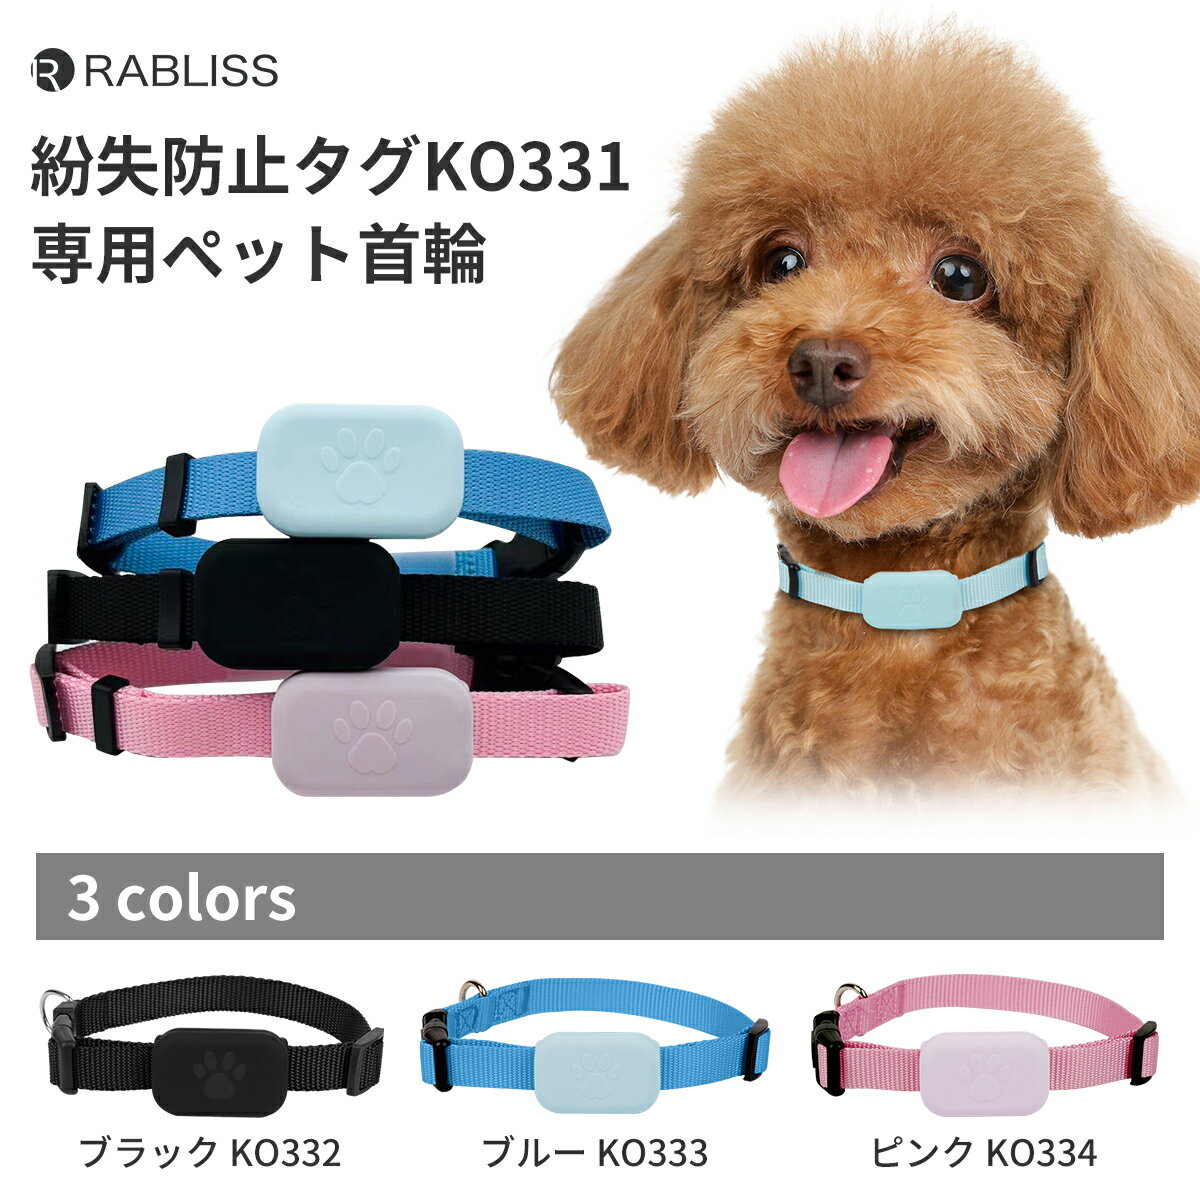 RABLISS 紛失防止タグ 専用ペットネックリング 首輪 3色 ブラック ピンク ブルー 軽い 犬 首輪 サイズ調節可 アウトドア かわいい 2